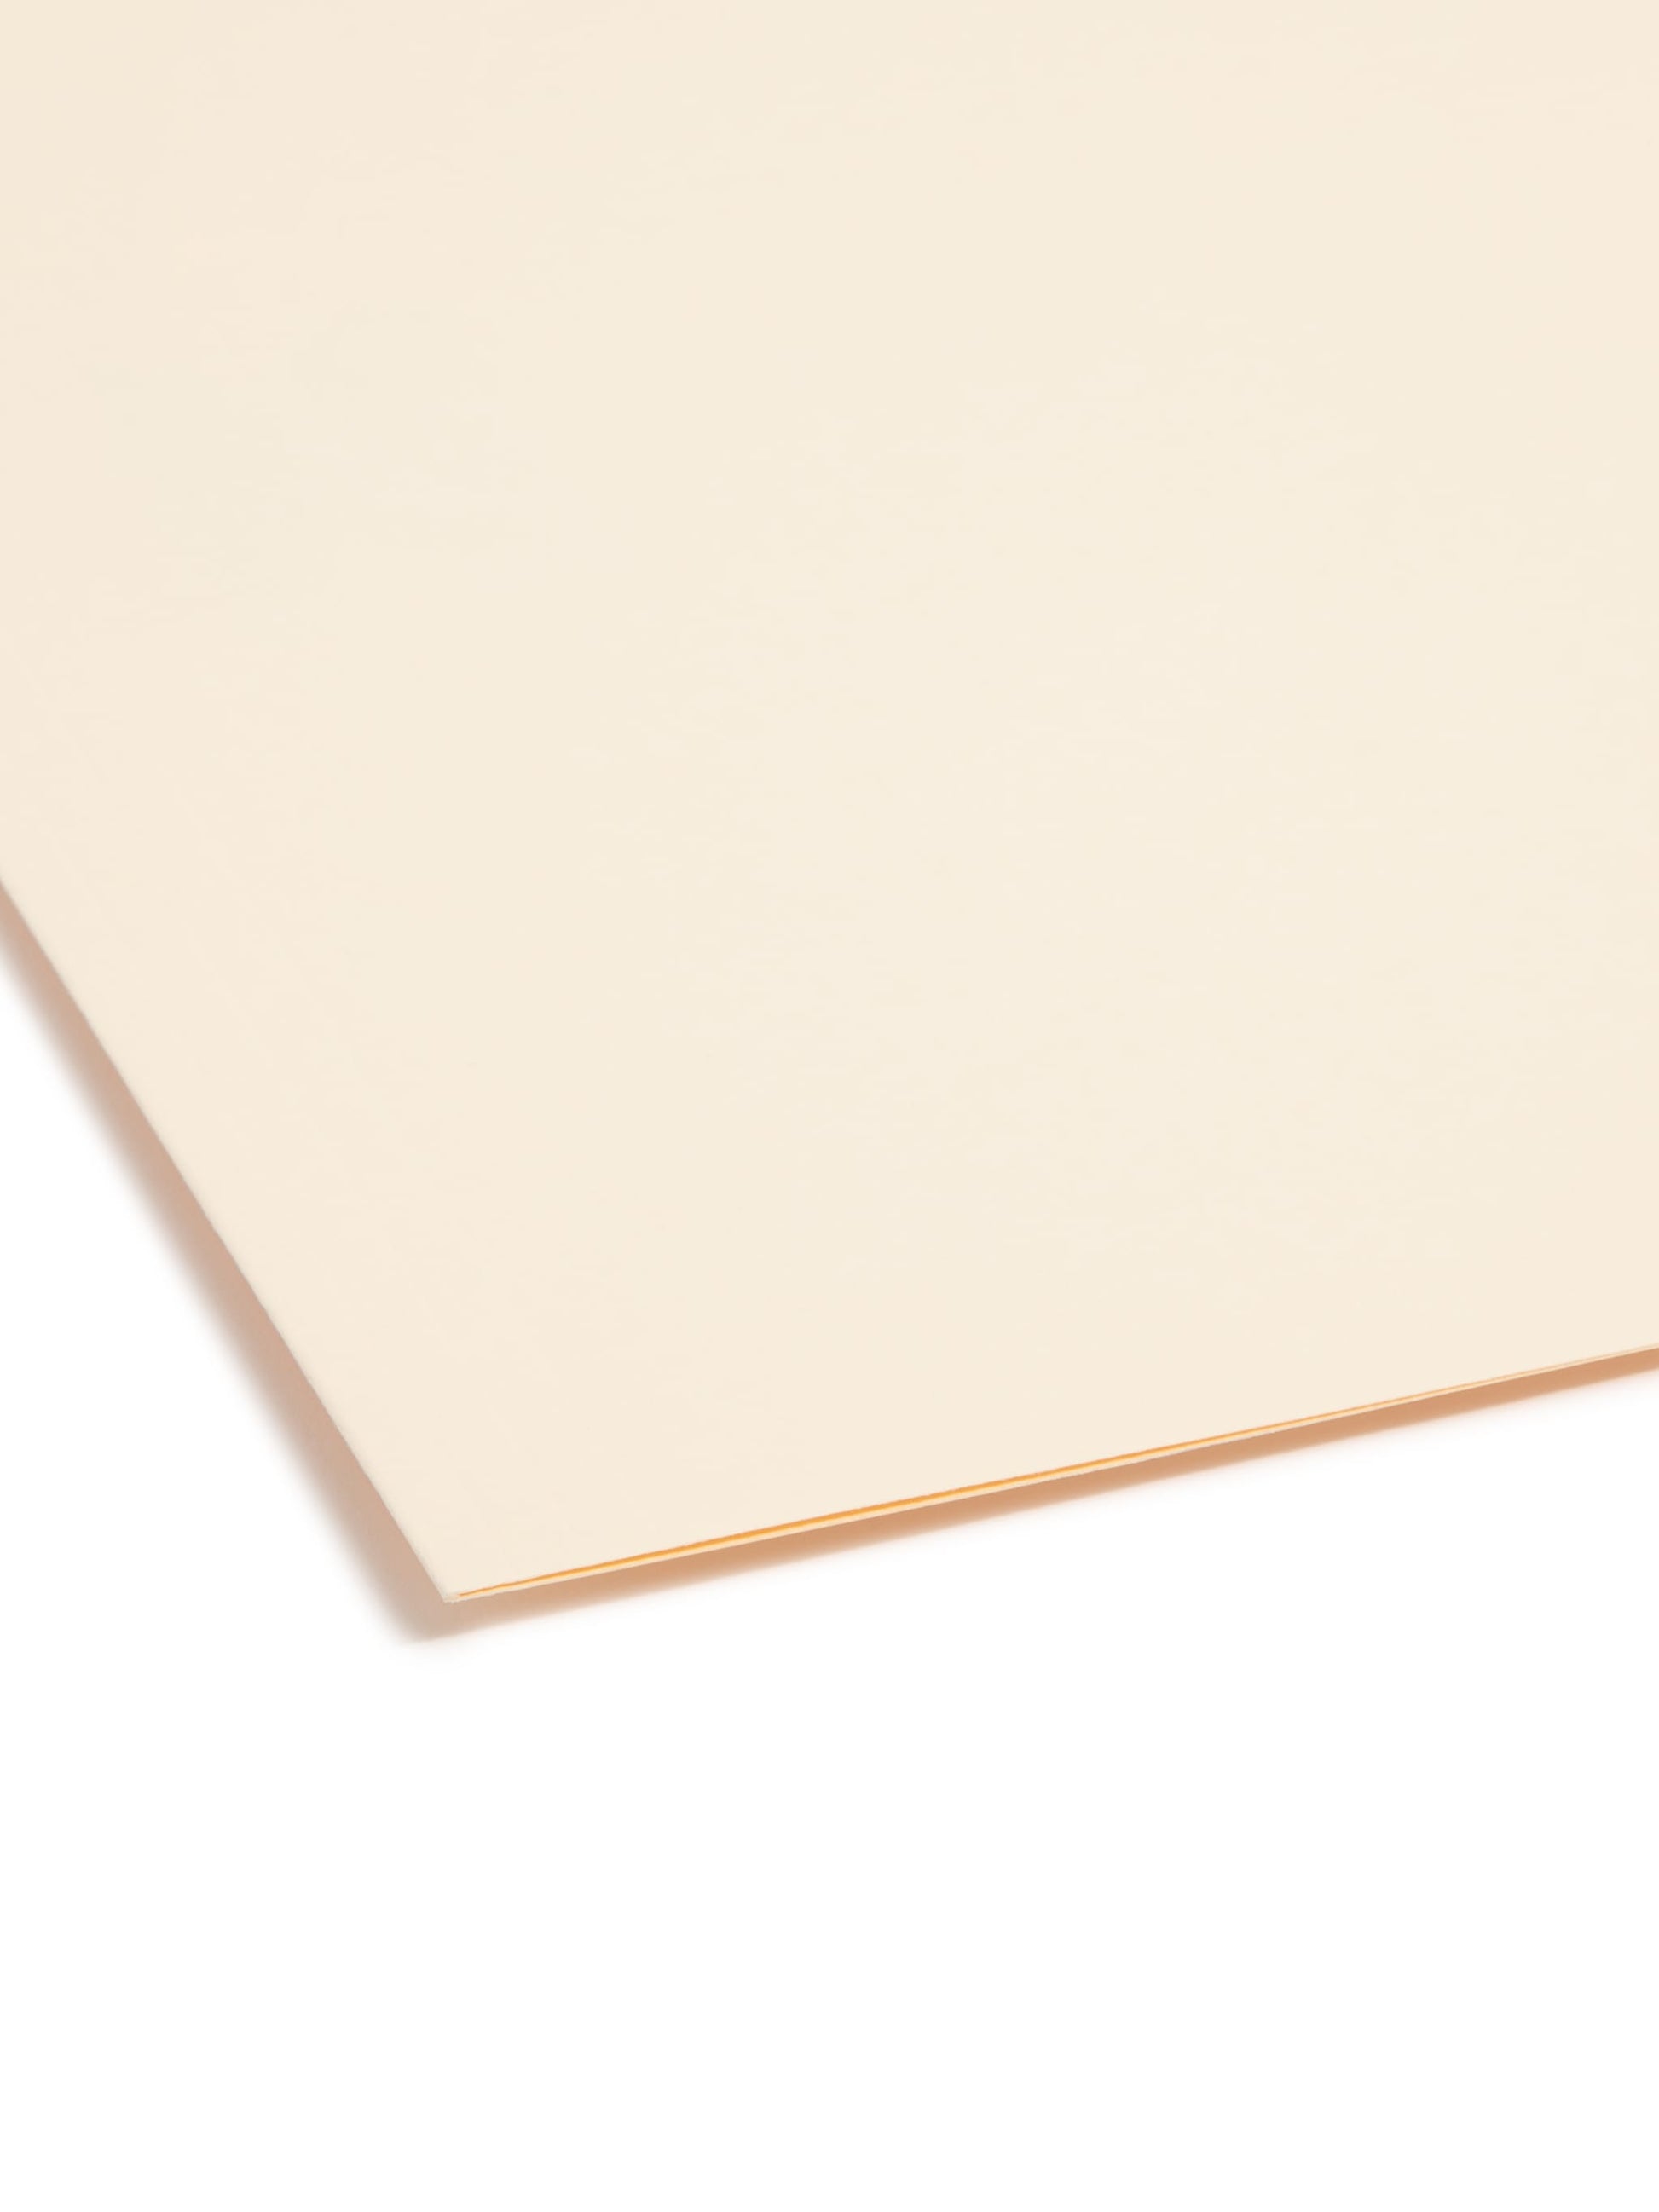 Reinforced Tab Fastener File Folders, Straight-Cut Tab, 1 Fastener, Manila Color, Legal Size, Set of 50, 086486195102